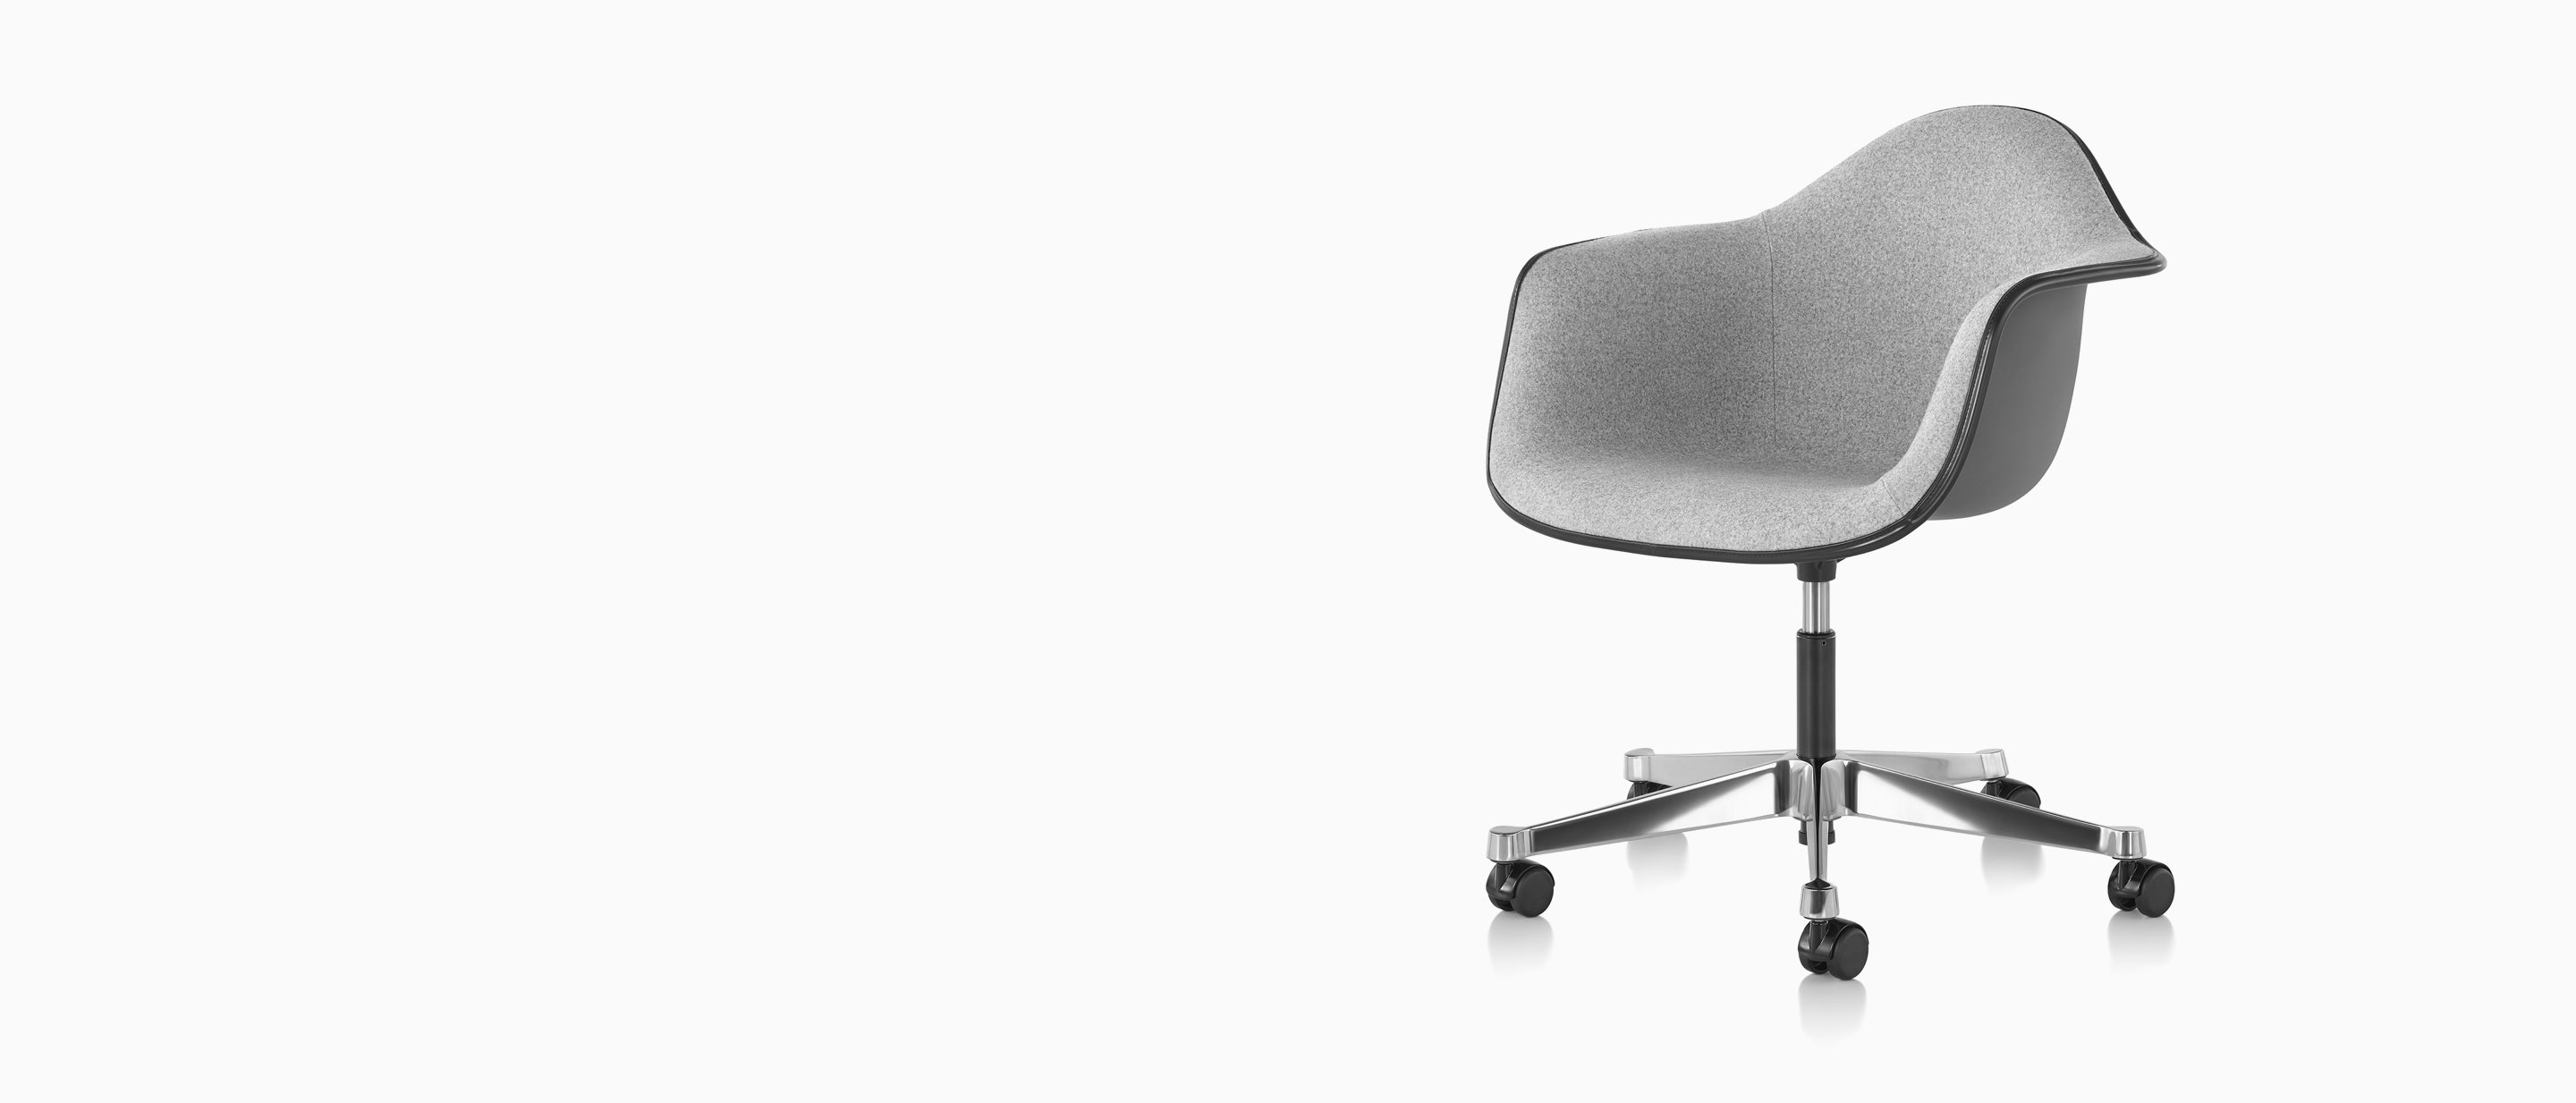 Eames Charles Eames desk chair for Herman Miller 